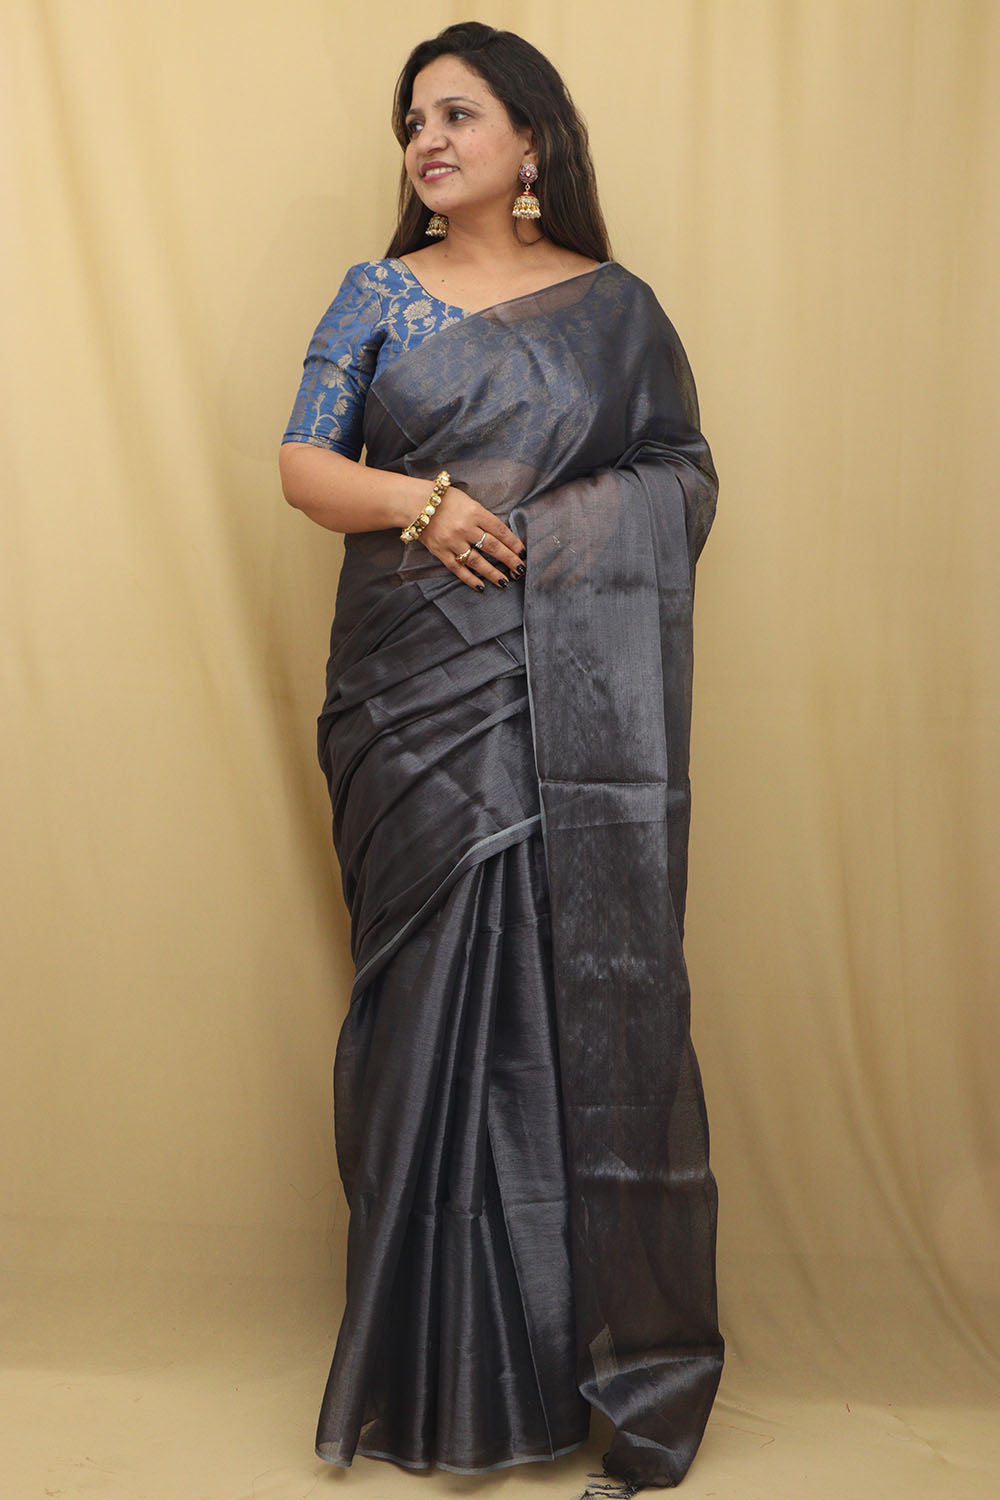 Chic Grey Bengal Tissue Cotton Saree - Elegant Style